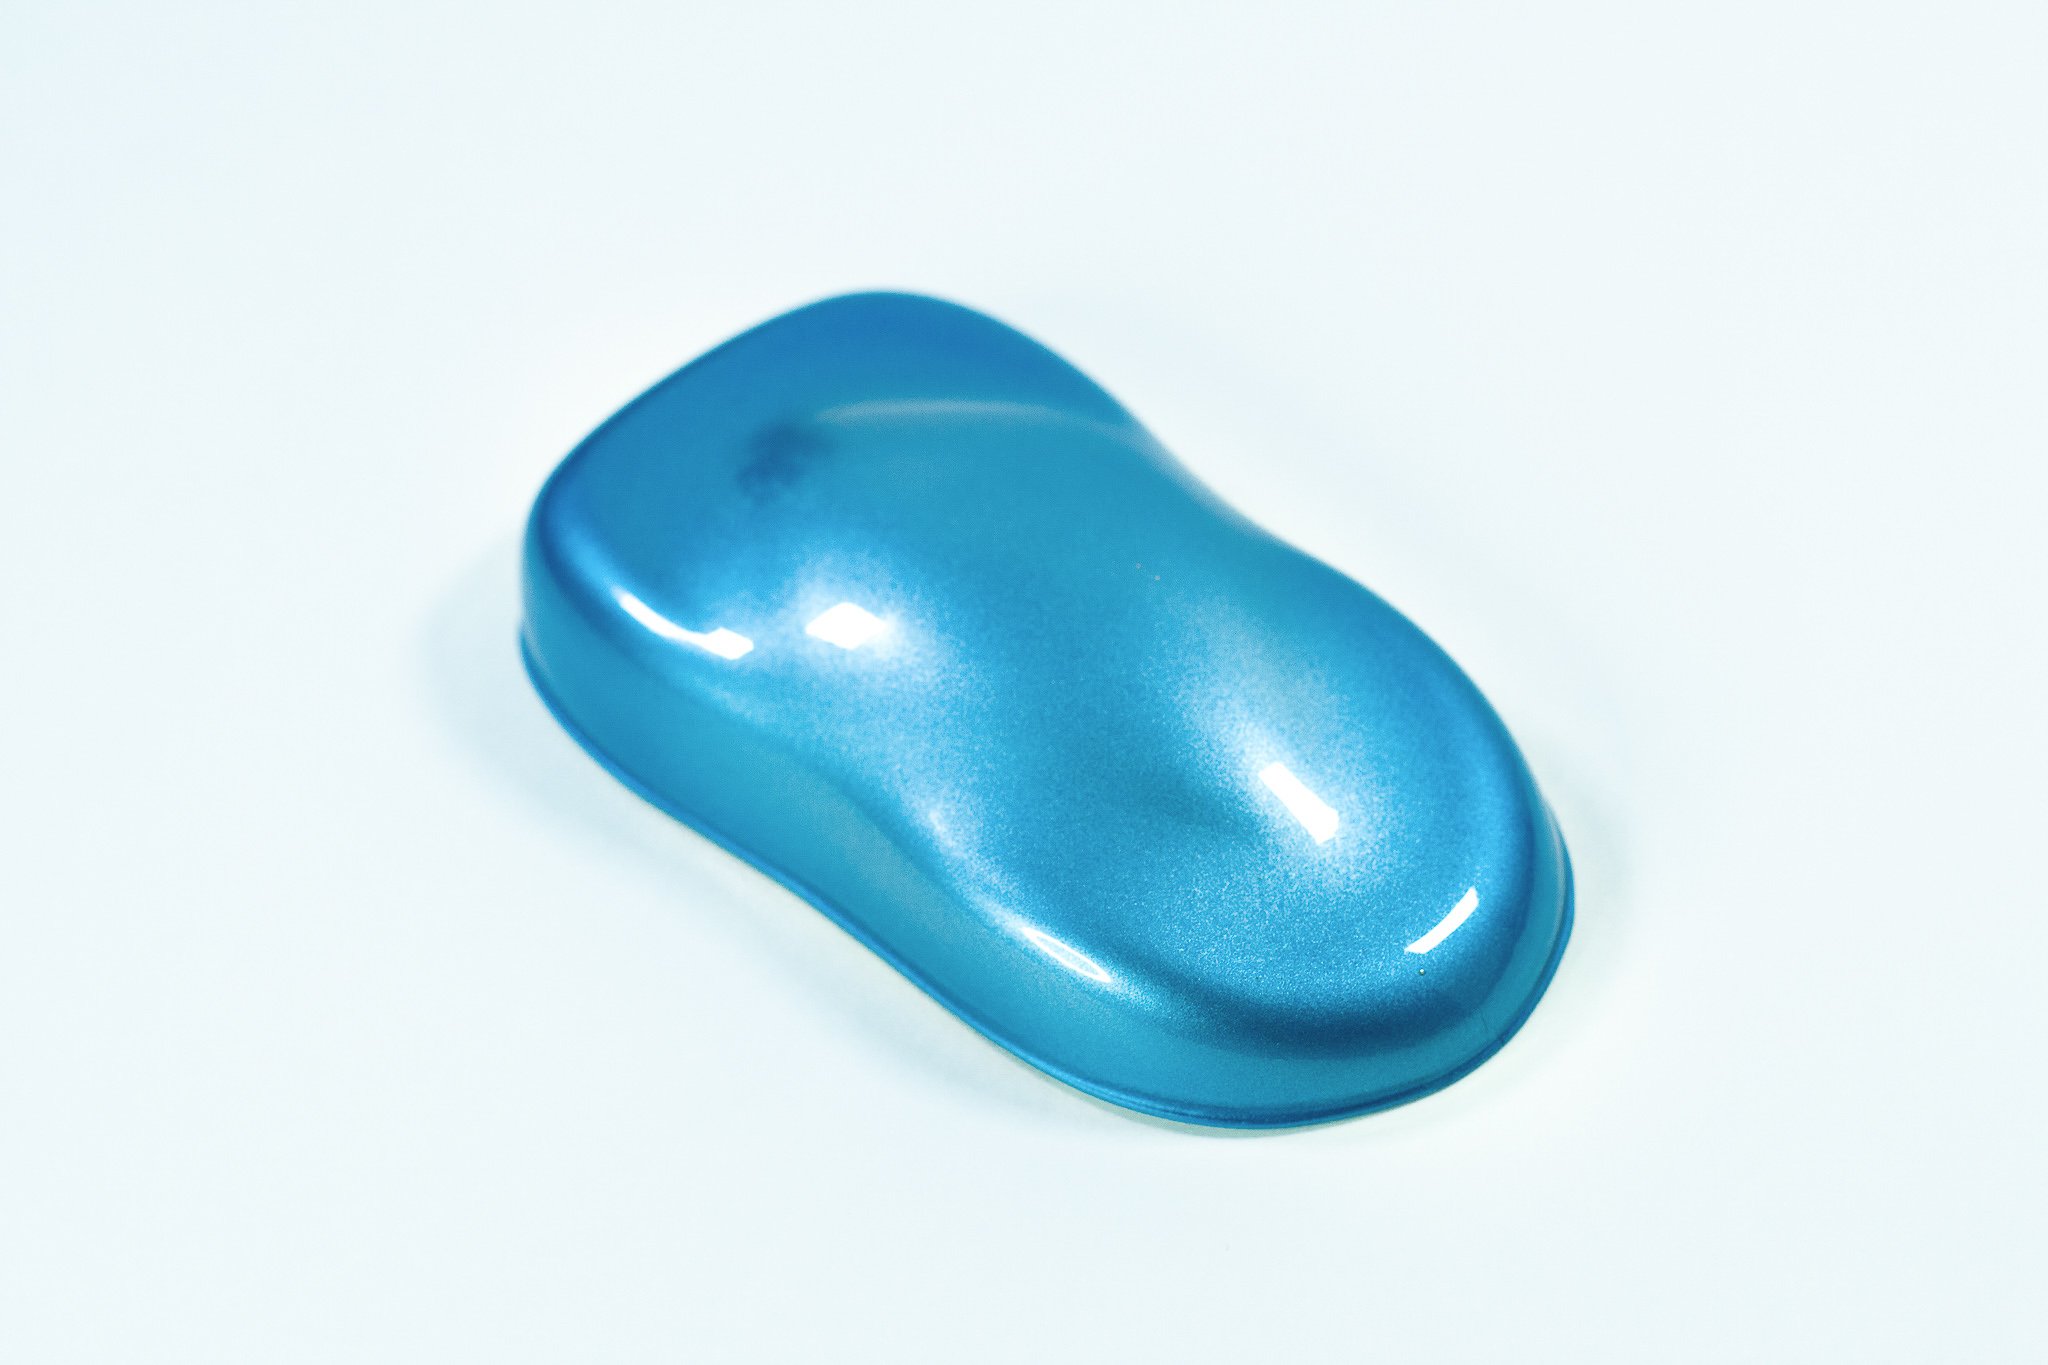 light blue candy